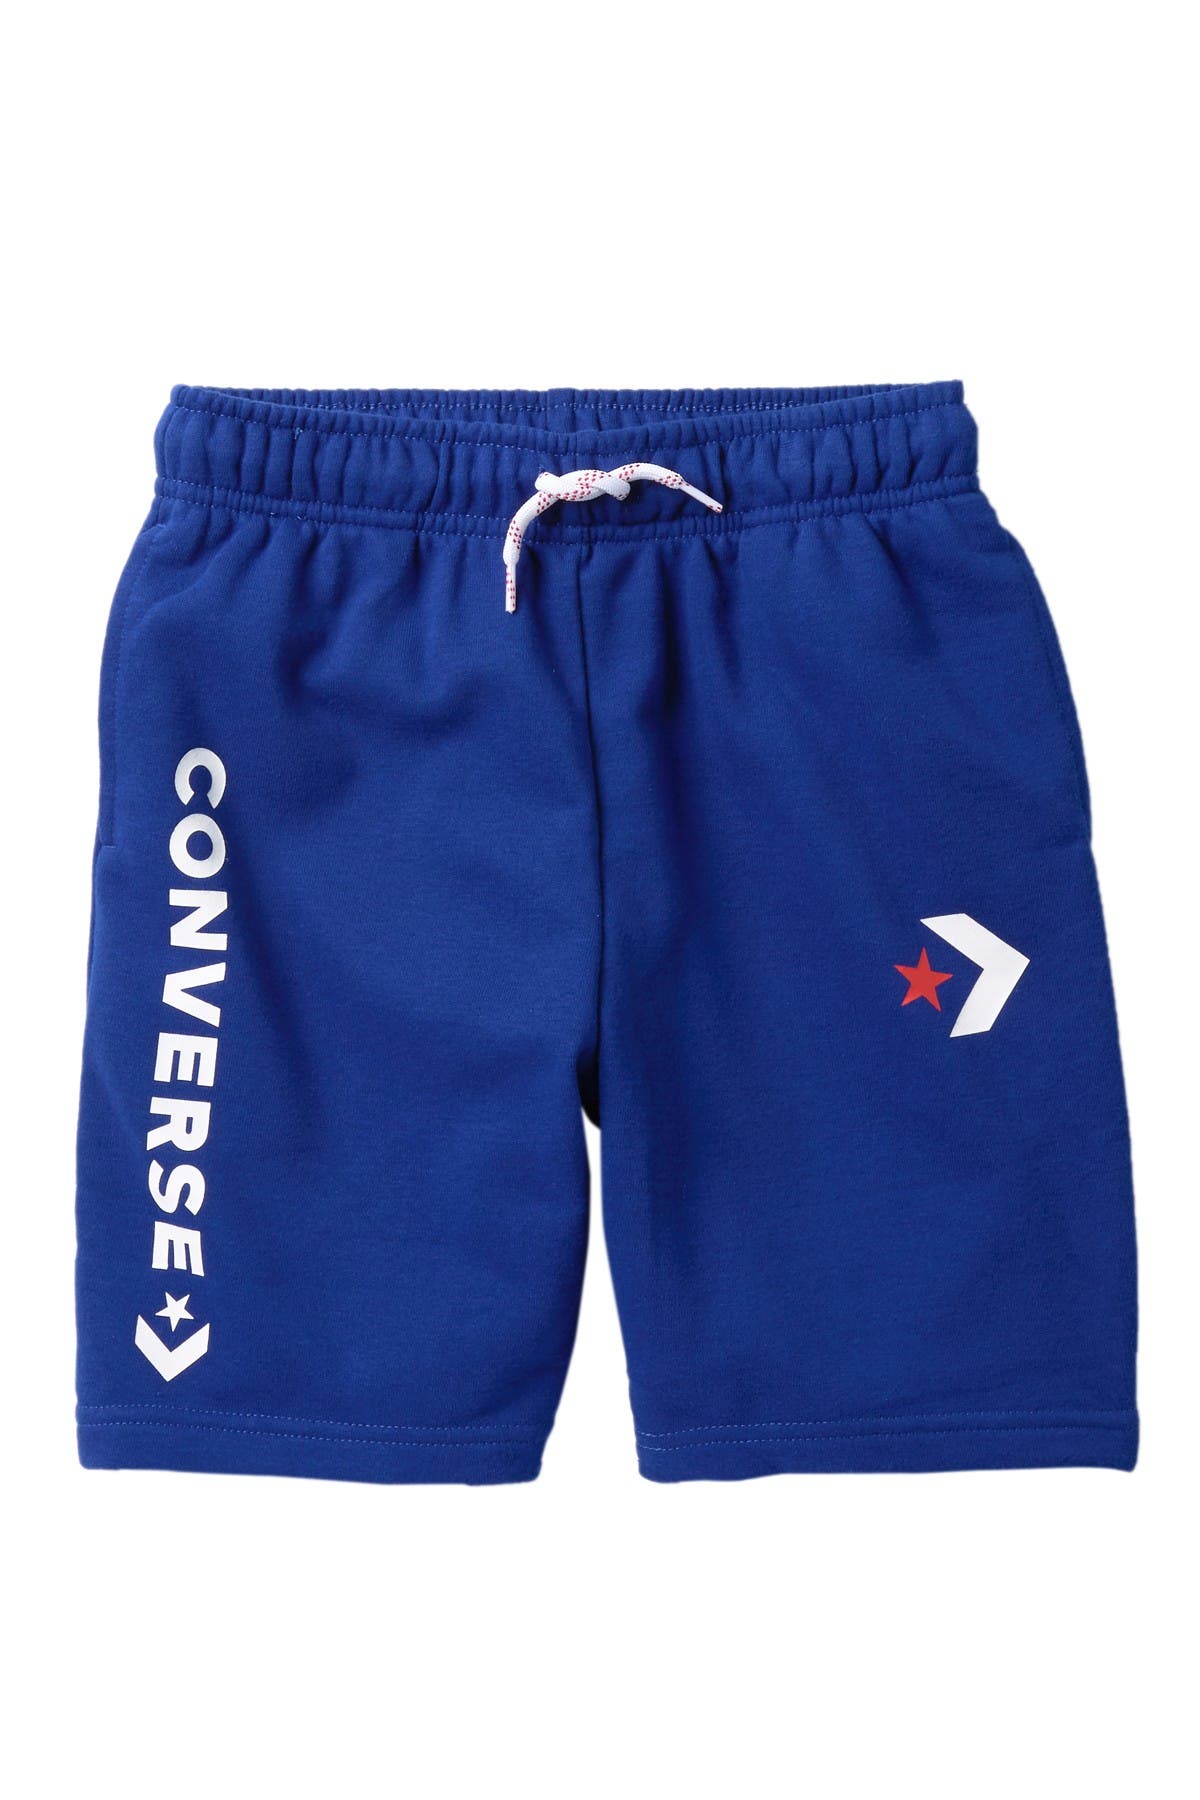 converse star chevron shorts